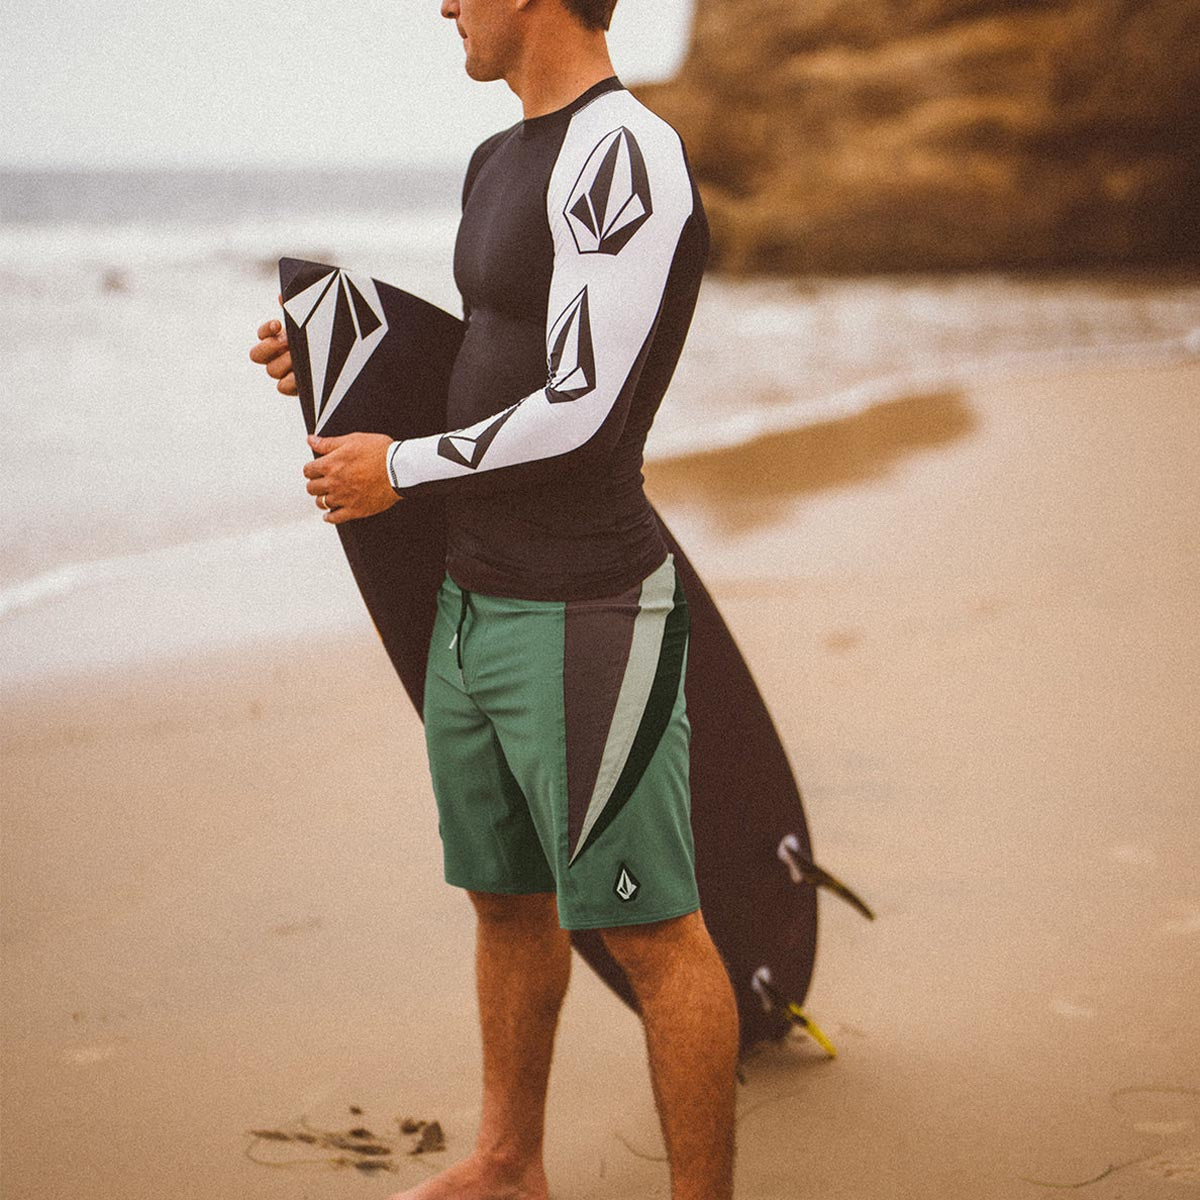 Volcom Surf Vitals J Robinson Mod 20 Board Shorts - Fir Green image 3